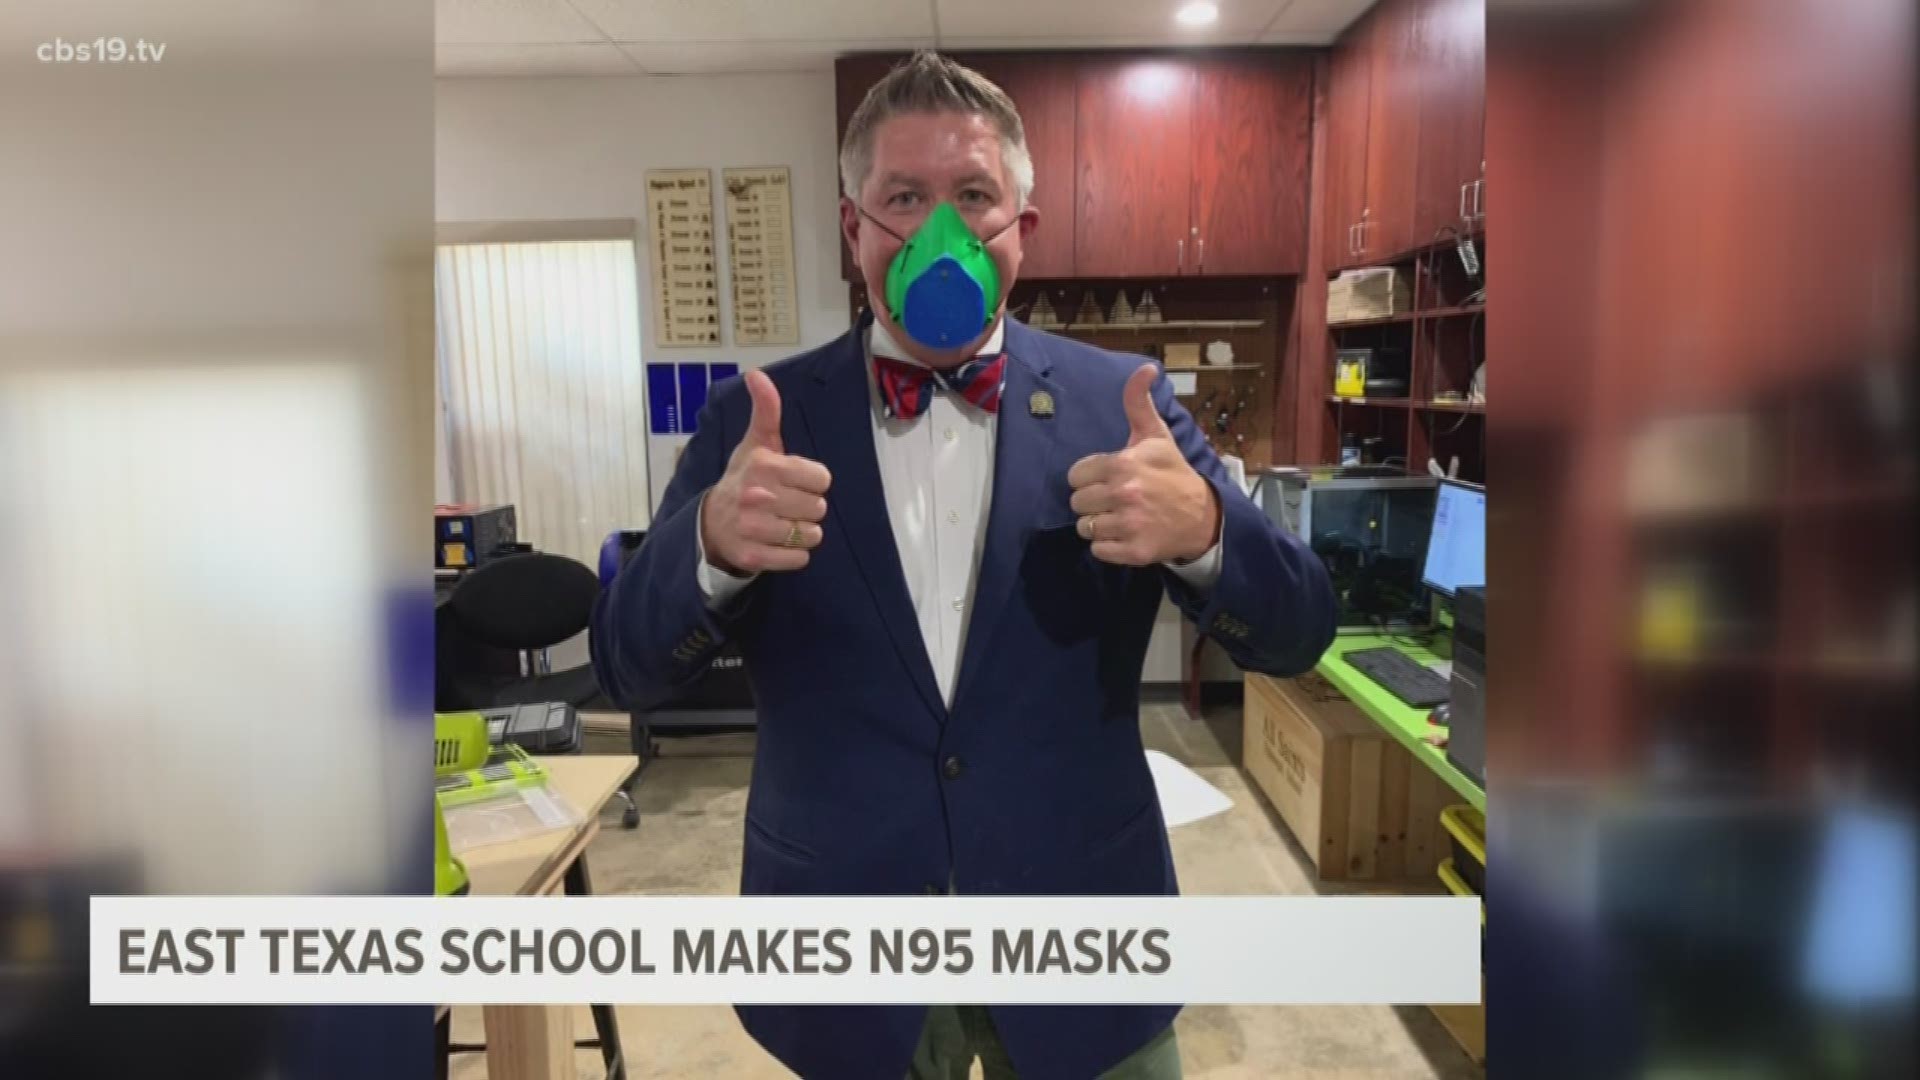 All Saints Episcopal School creates N95 masks, cotton masks and face shields through its 3D printer.